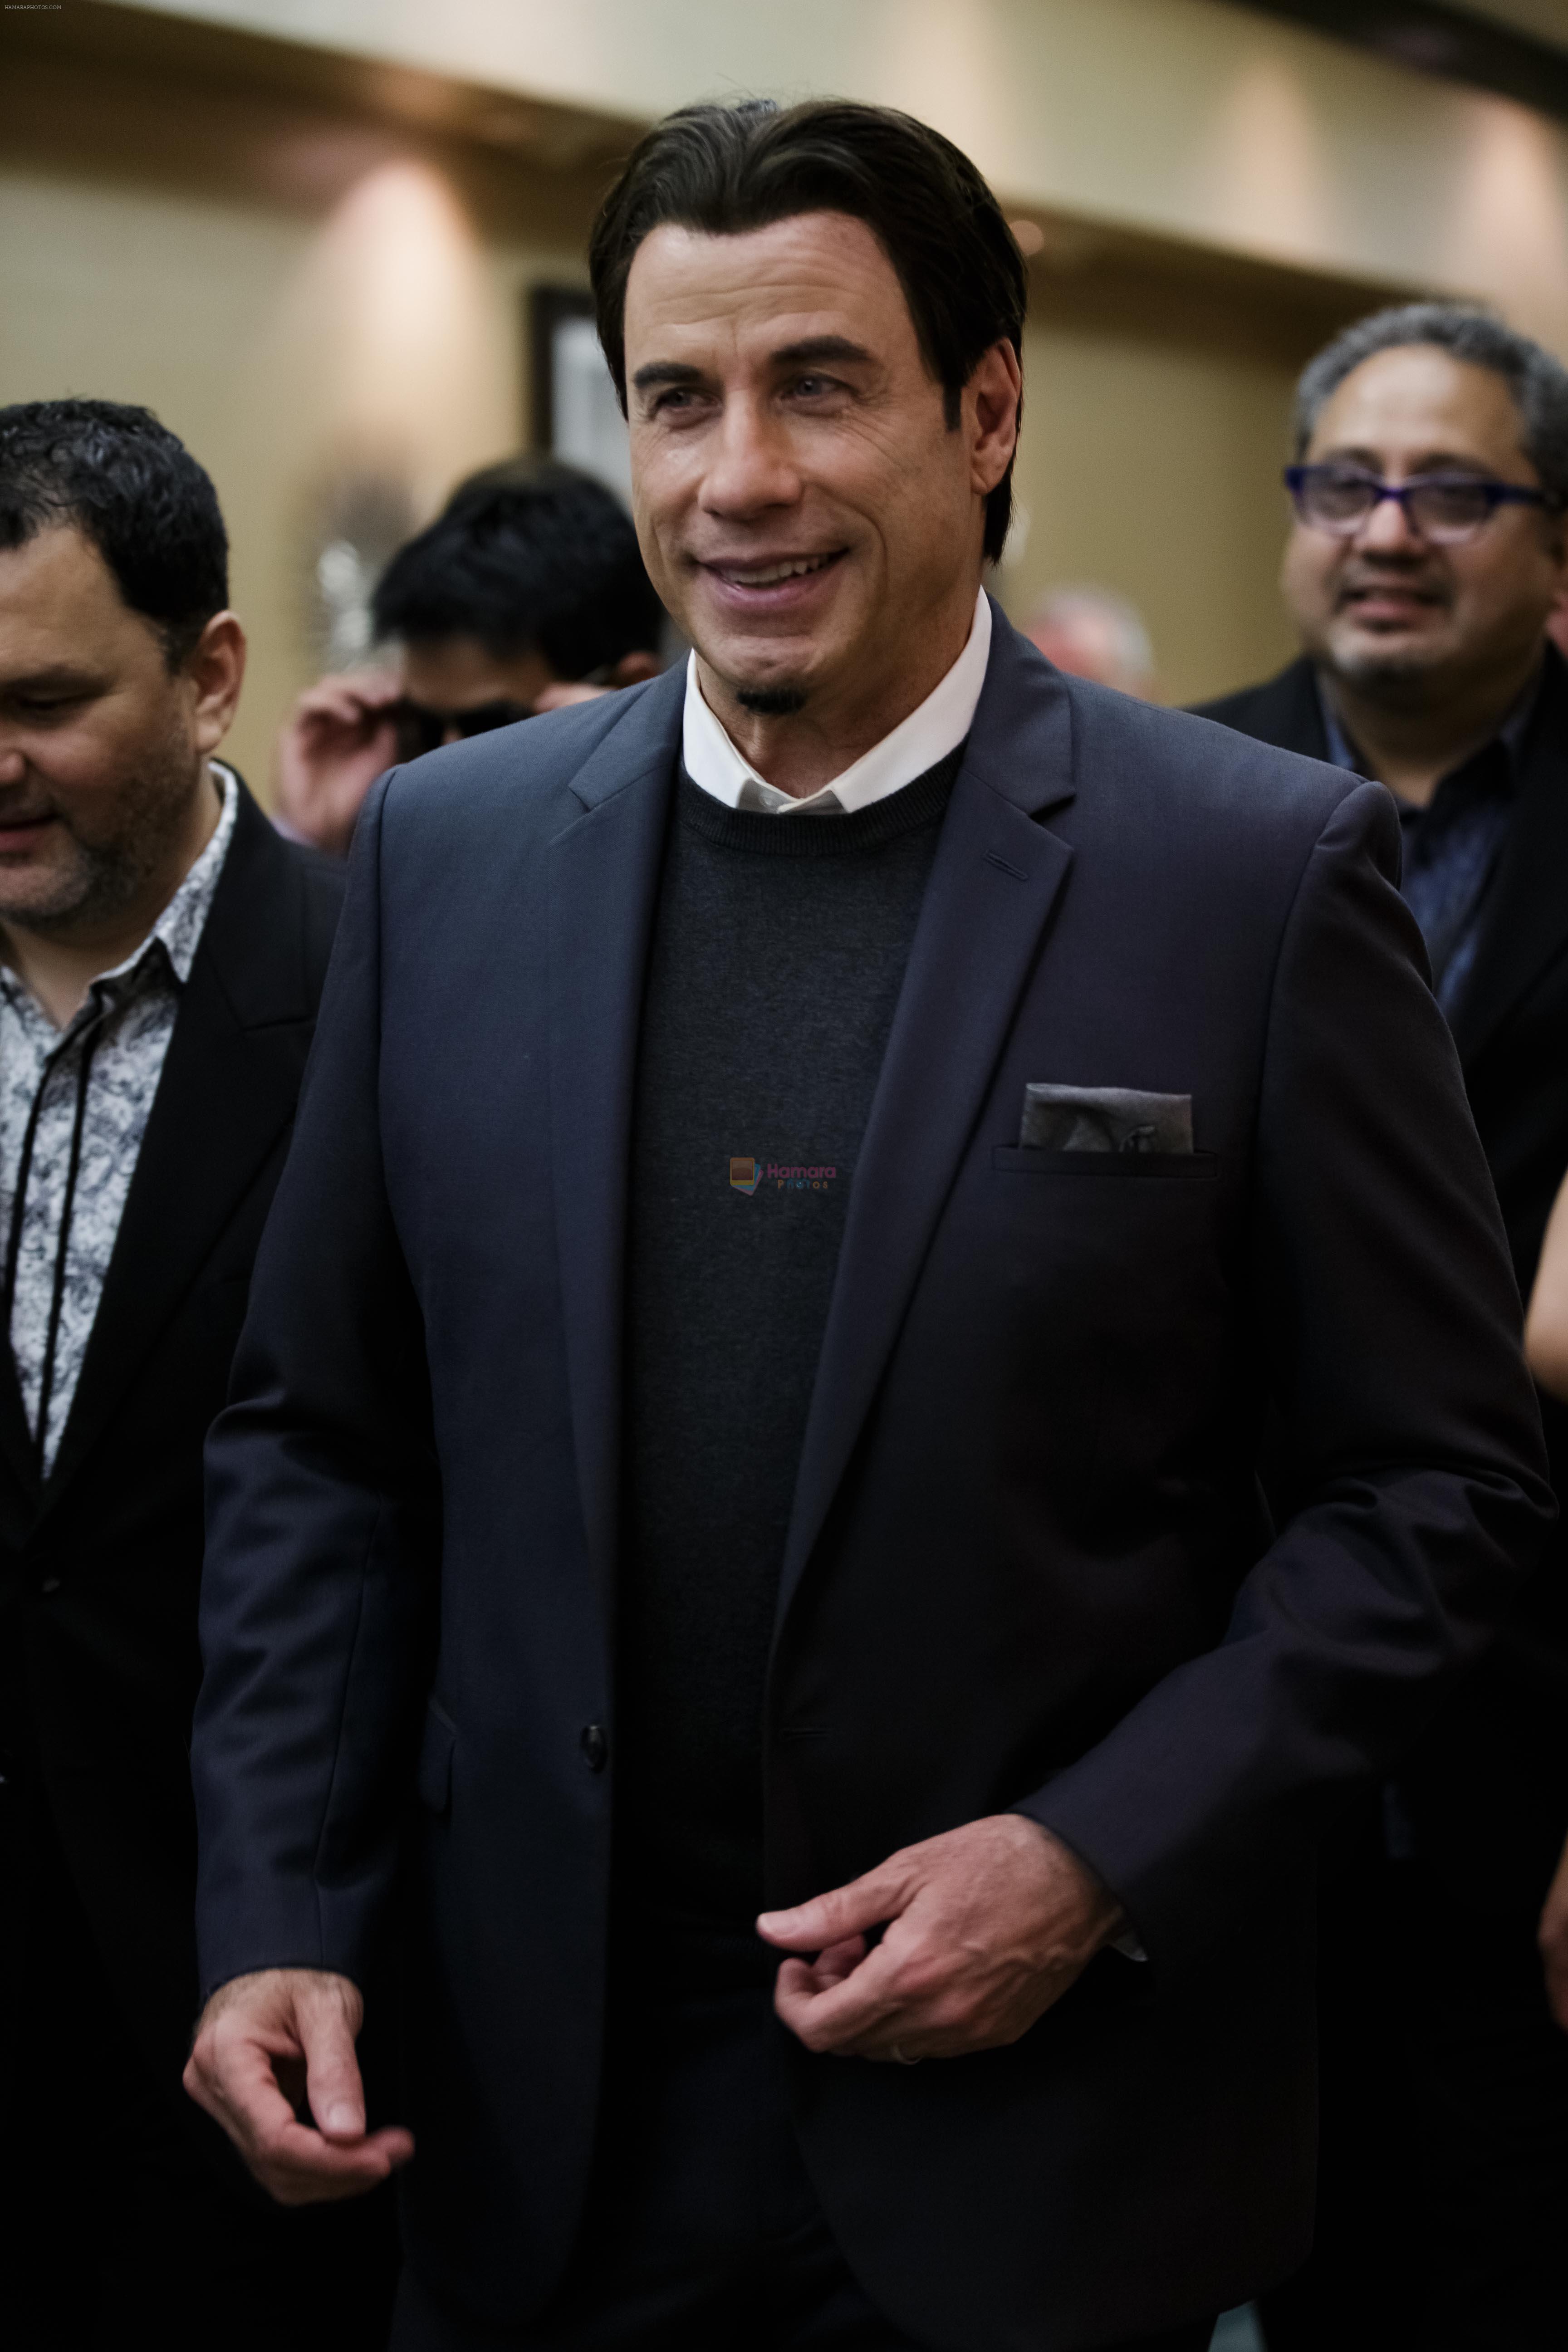 John Travolta Presser on Day 4 at John Travolta Presser on 26th April 2014